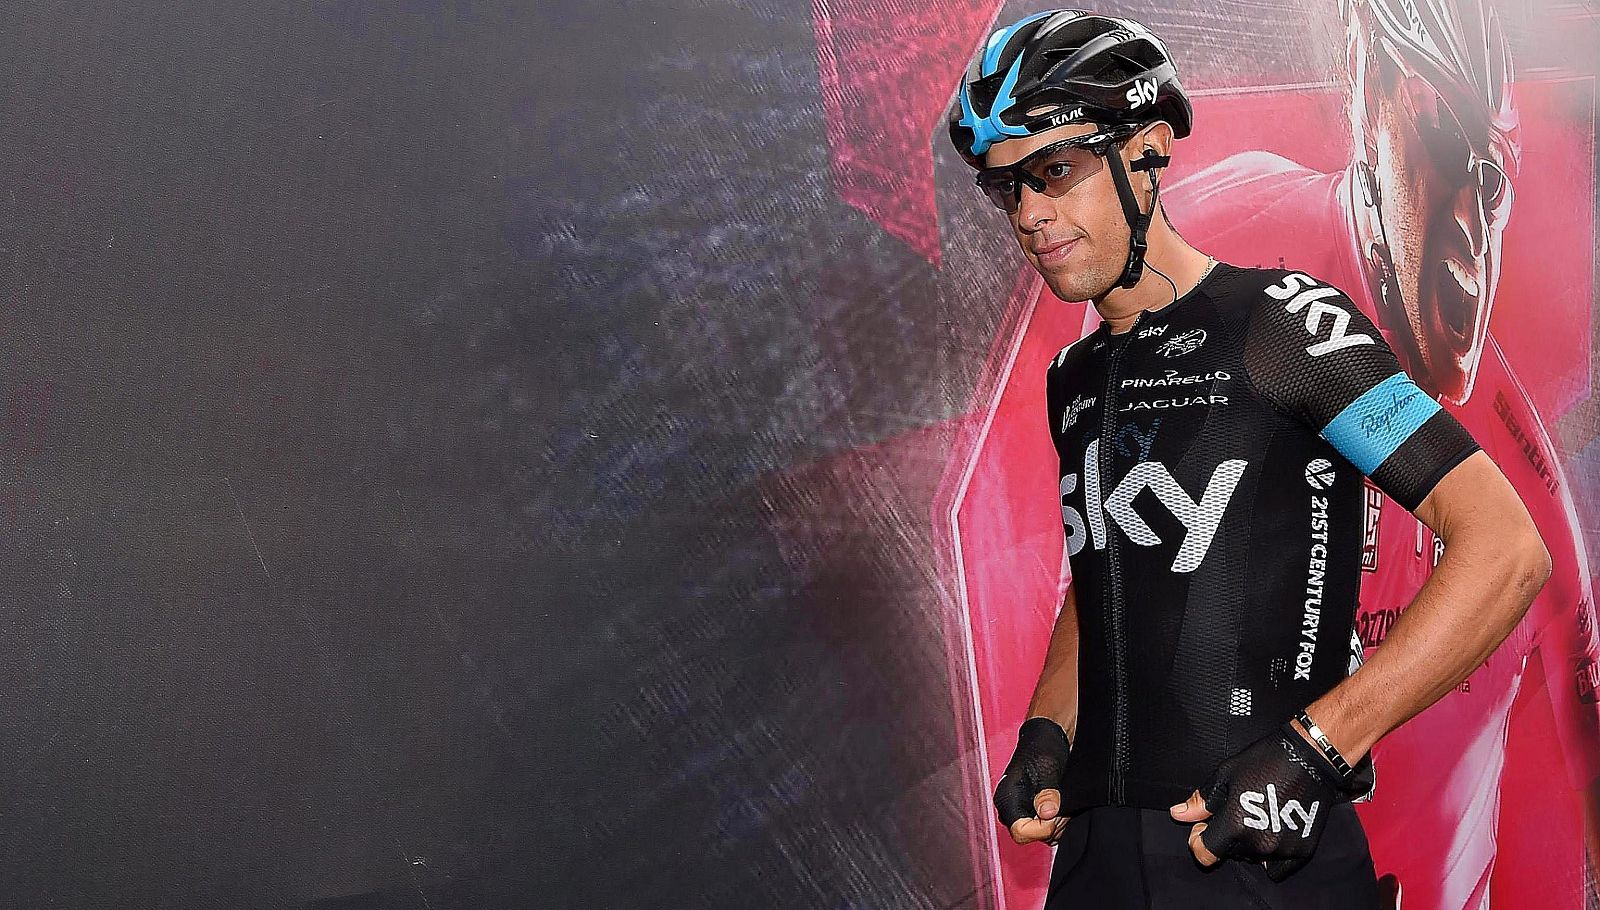 Imagen del ciclista australiano Richie Porte, del equipo Sky, antes del inicio de la duodécima etapa del Giro de Italia.